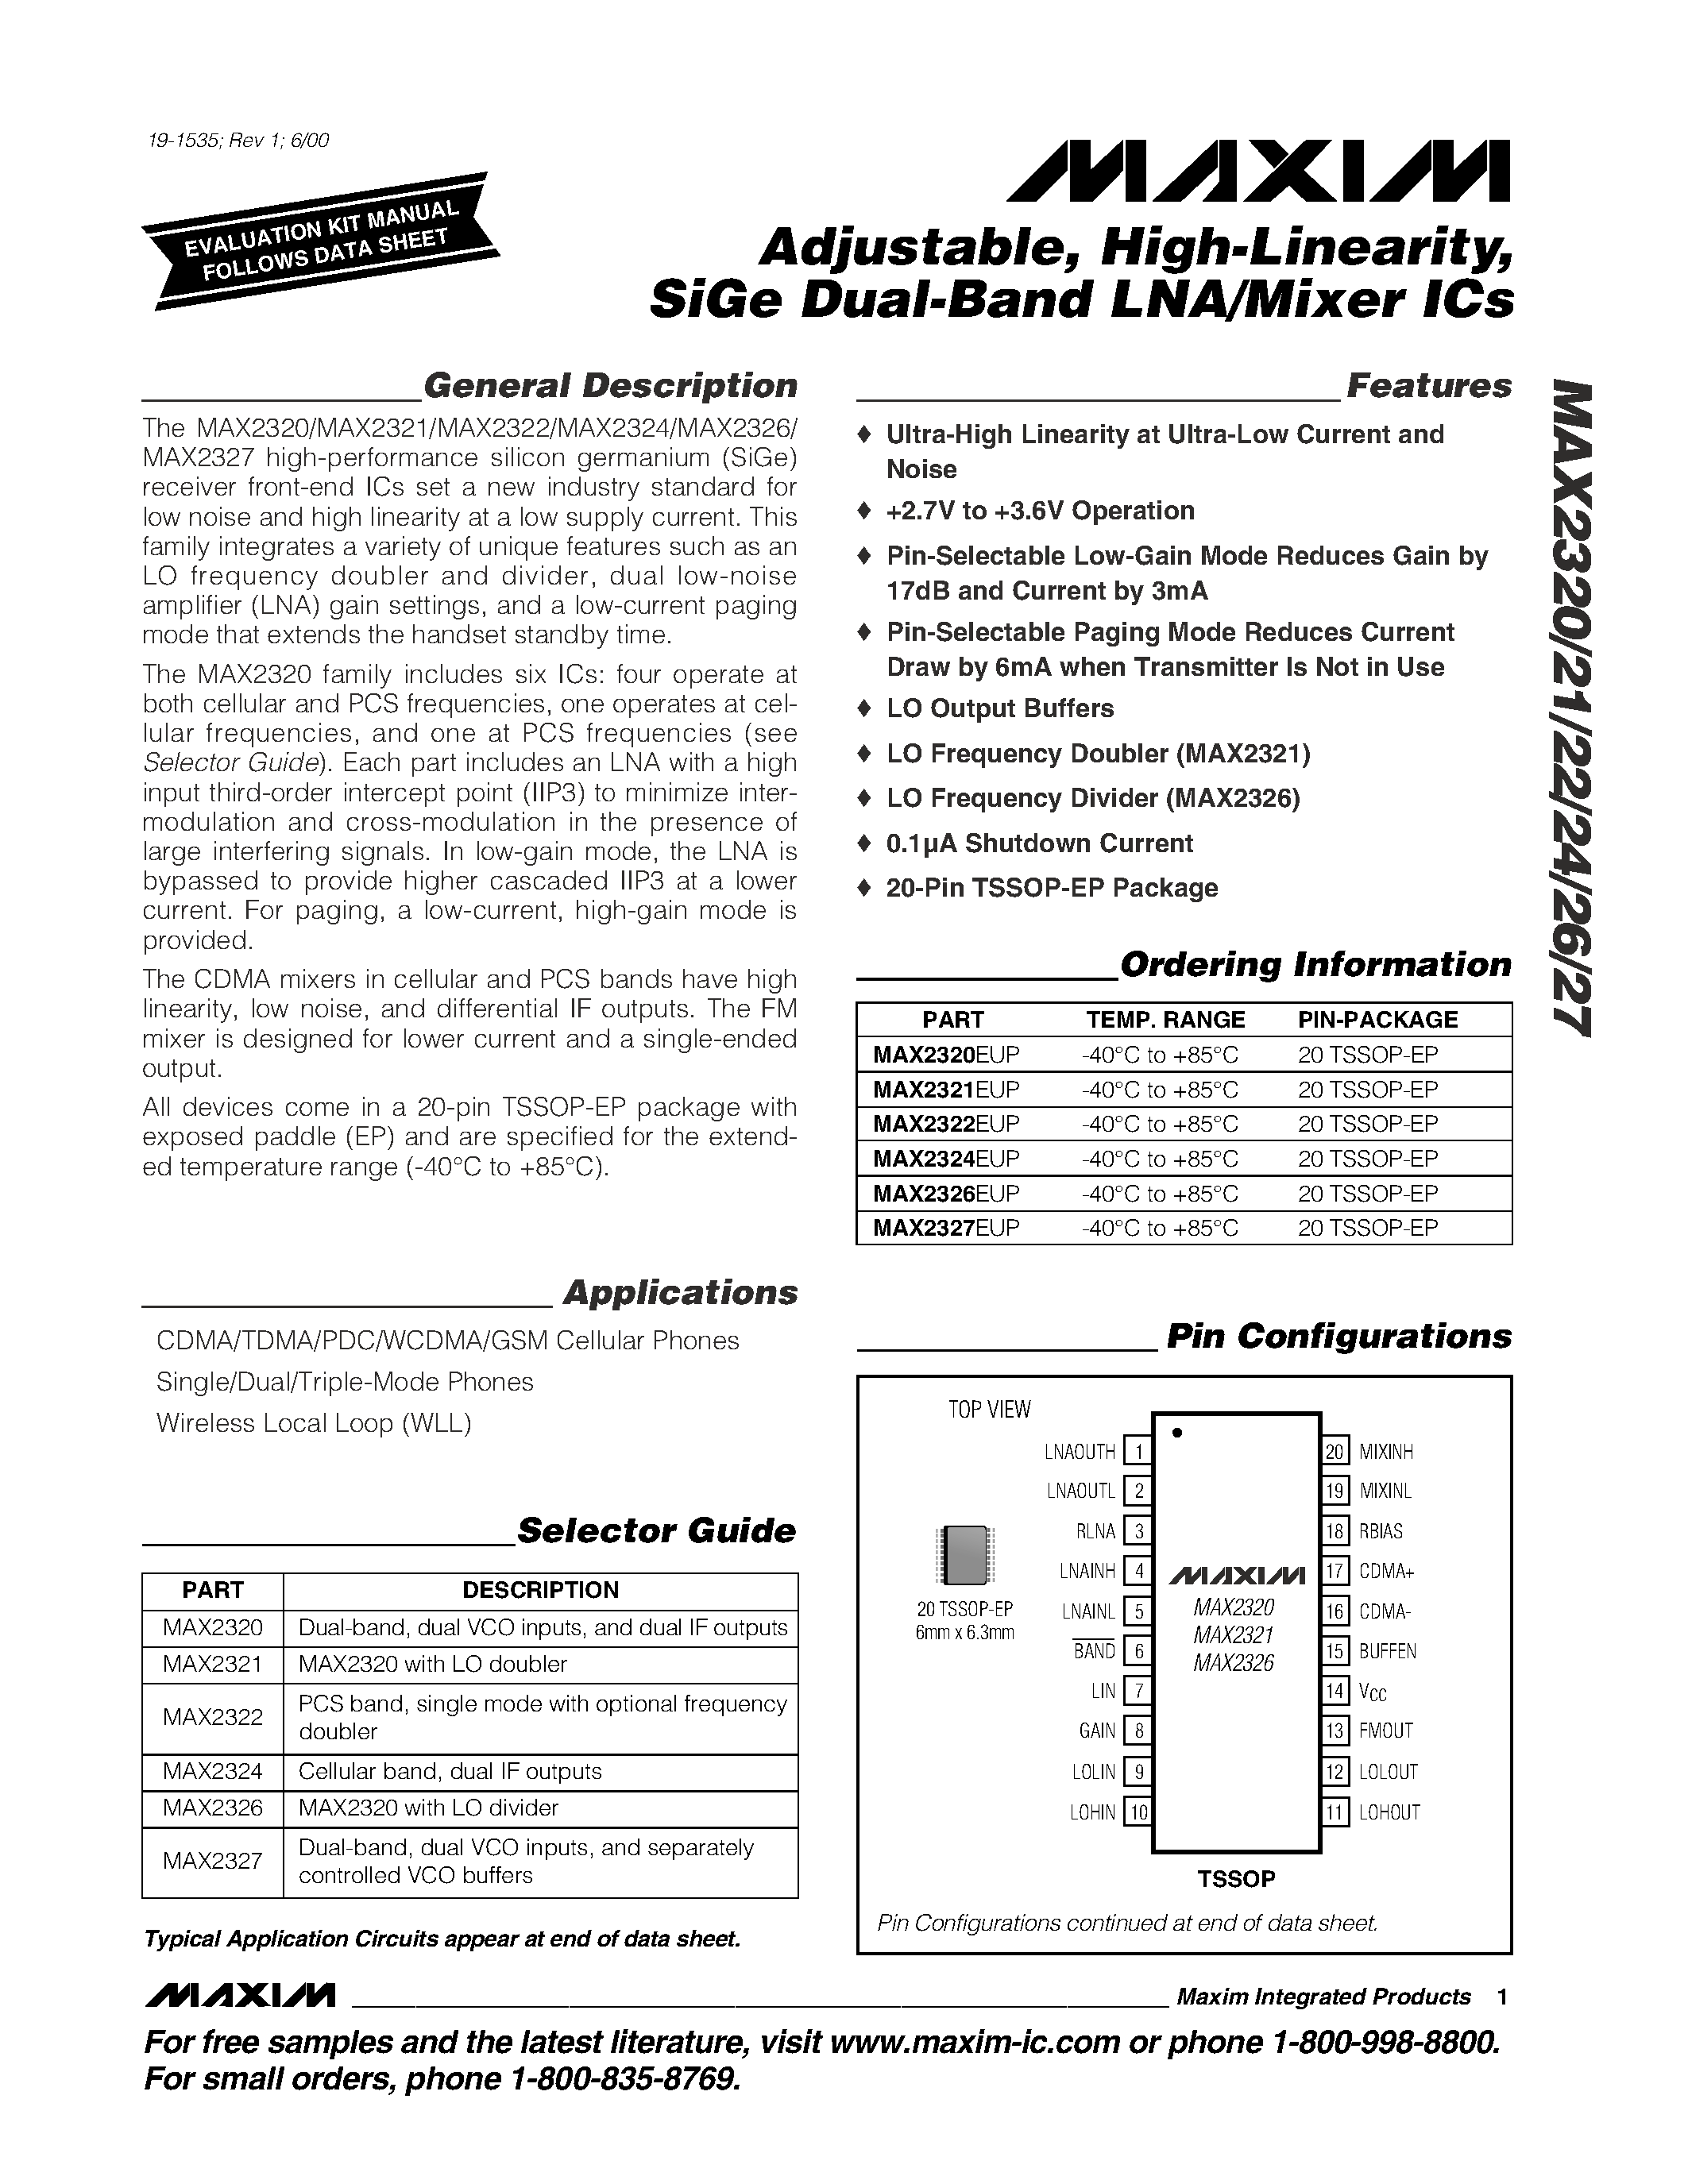 Datasheet MAX2320EUP - Adjustable / High-Linearity / SiGe Dual-Band LNA/Mixer ICs page 1